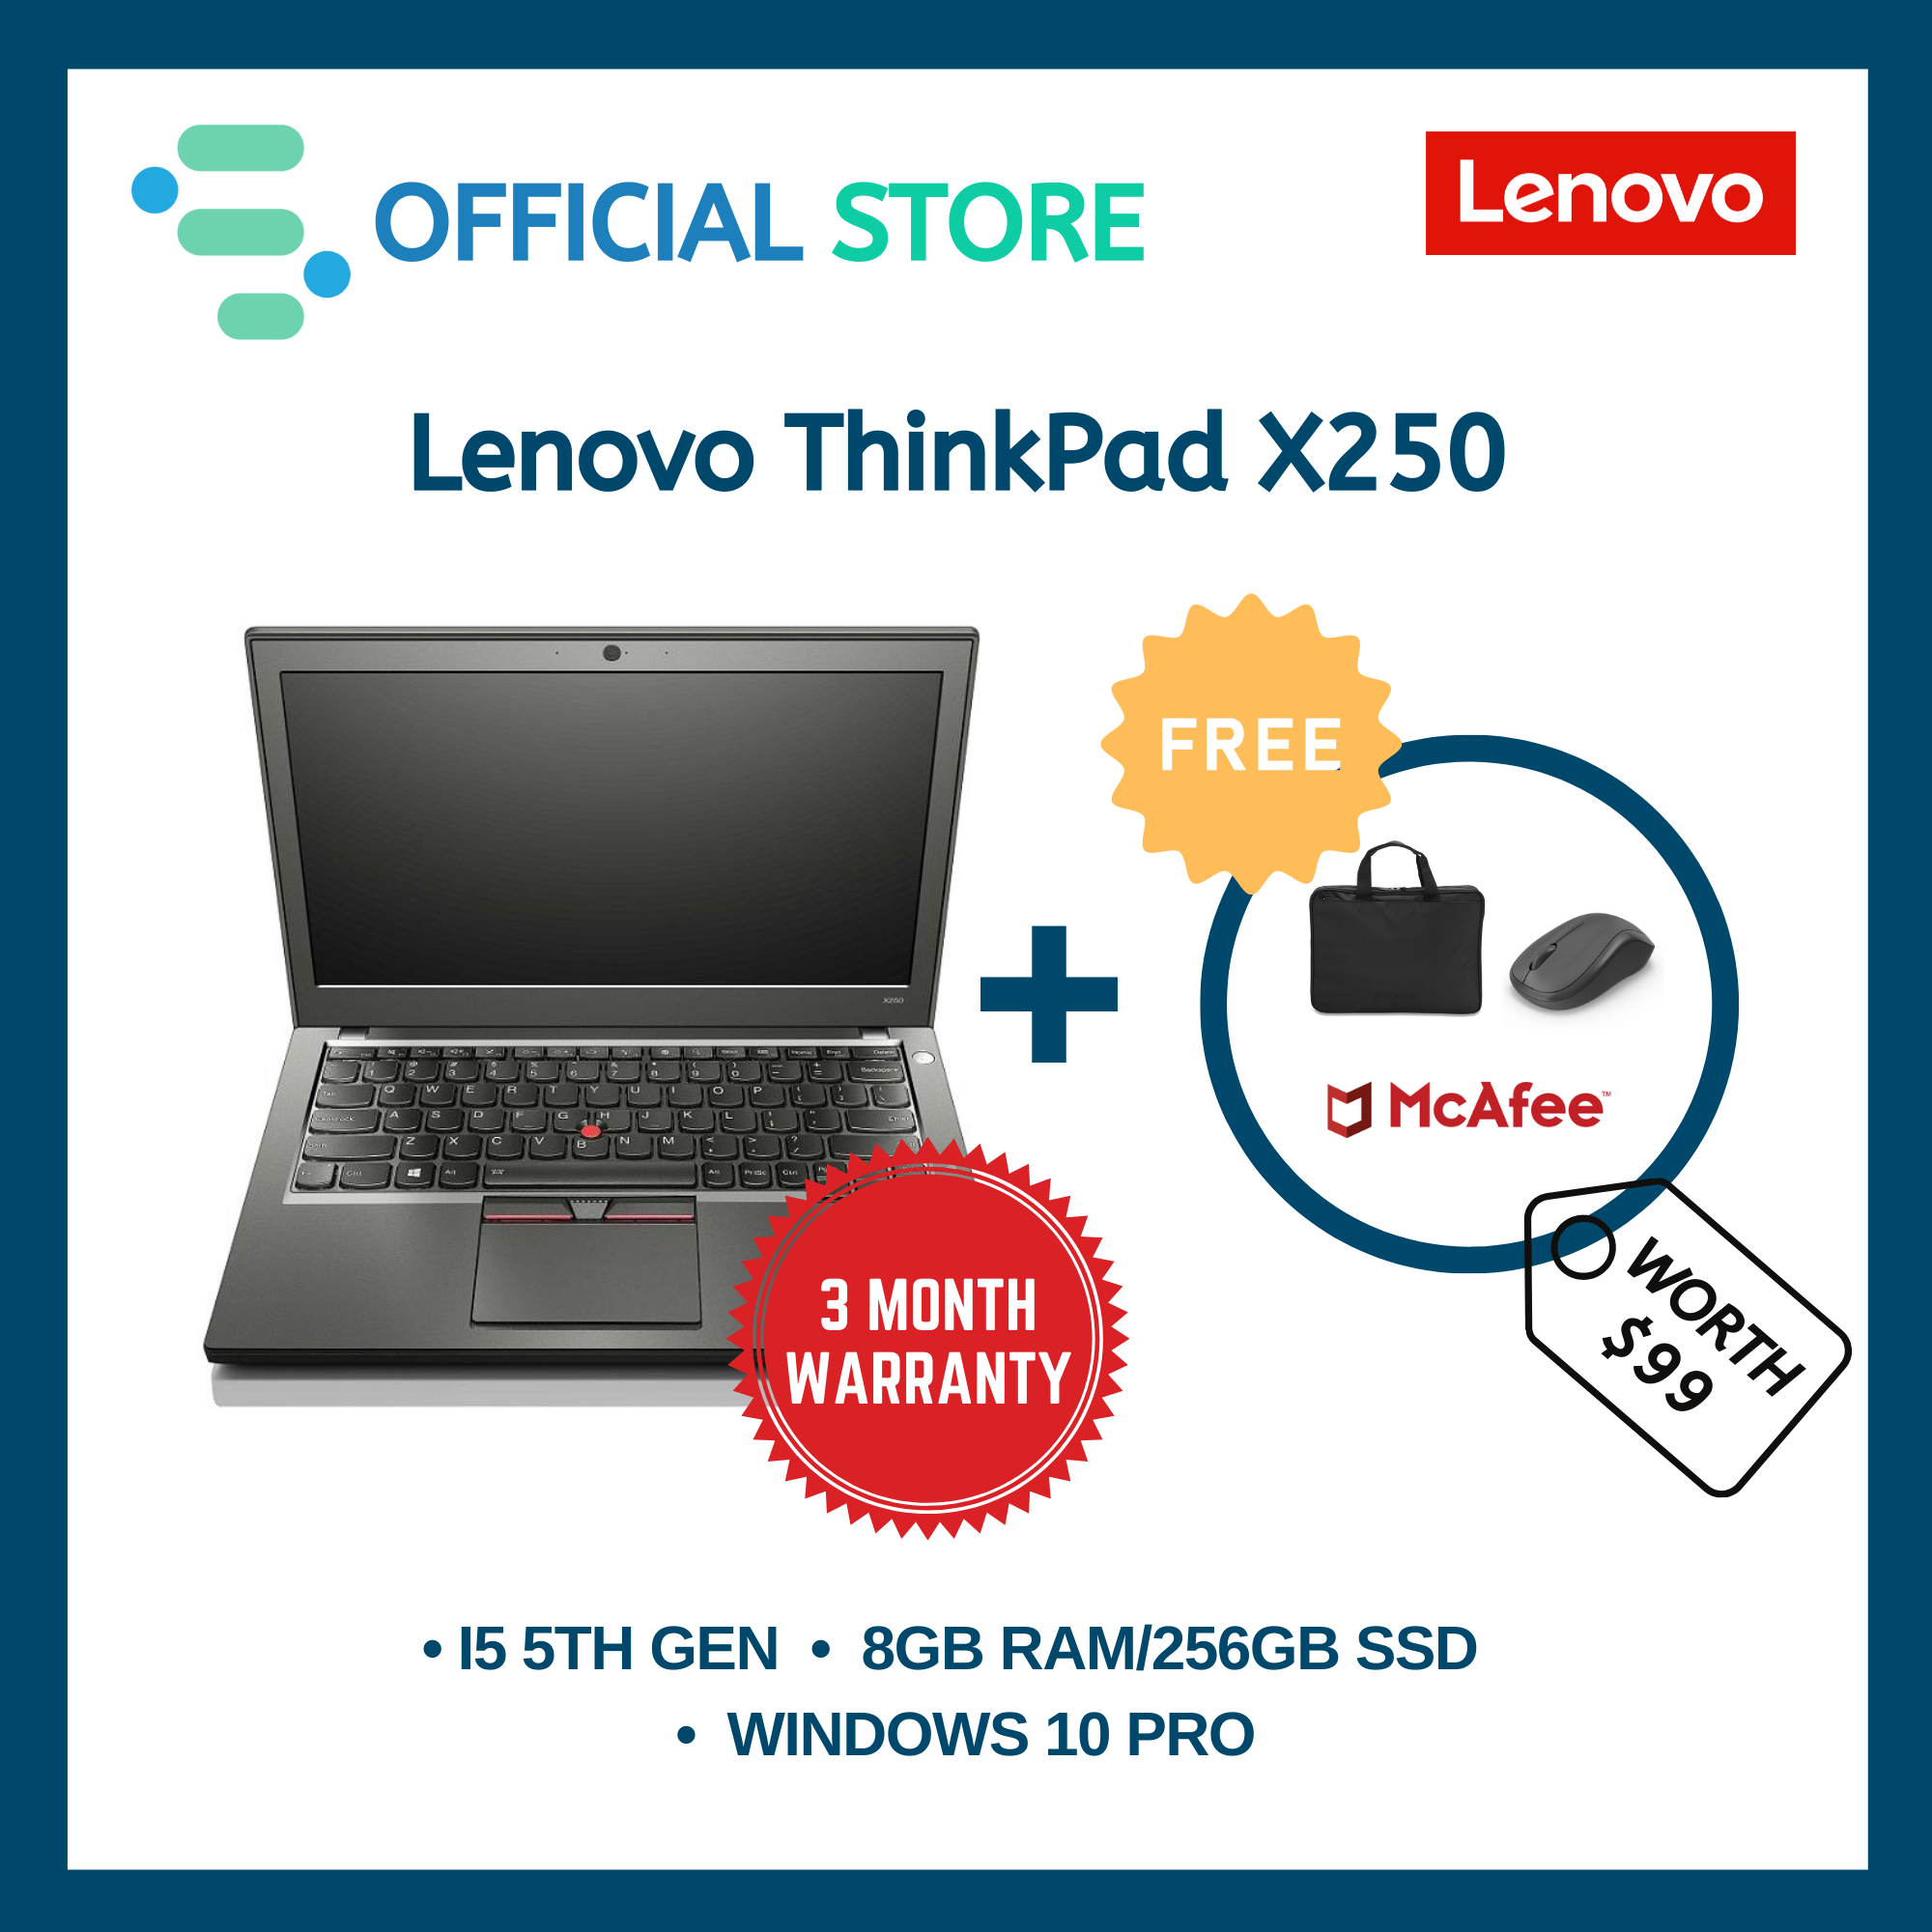 Refurbished] Lenovo ThinkPad T410 | 14.1 INCH | Intel i5-560M | 8GB Ram | 256GB SSD / 500GB HDD | 90 Day | FREE Bag + Mouse + Anti-Virus | Lazada Singapore